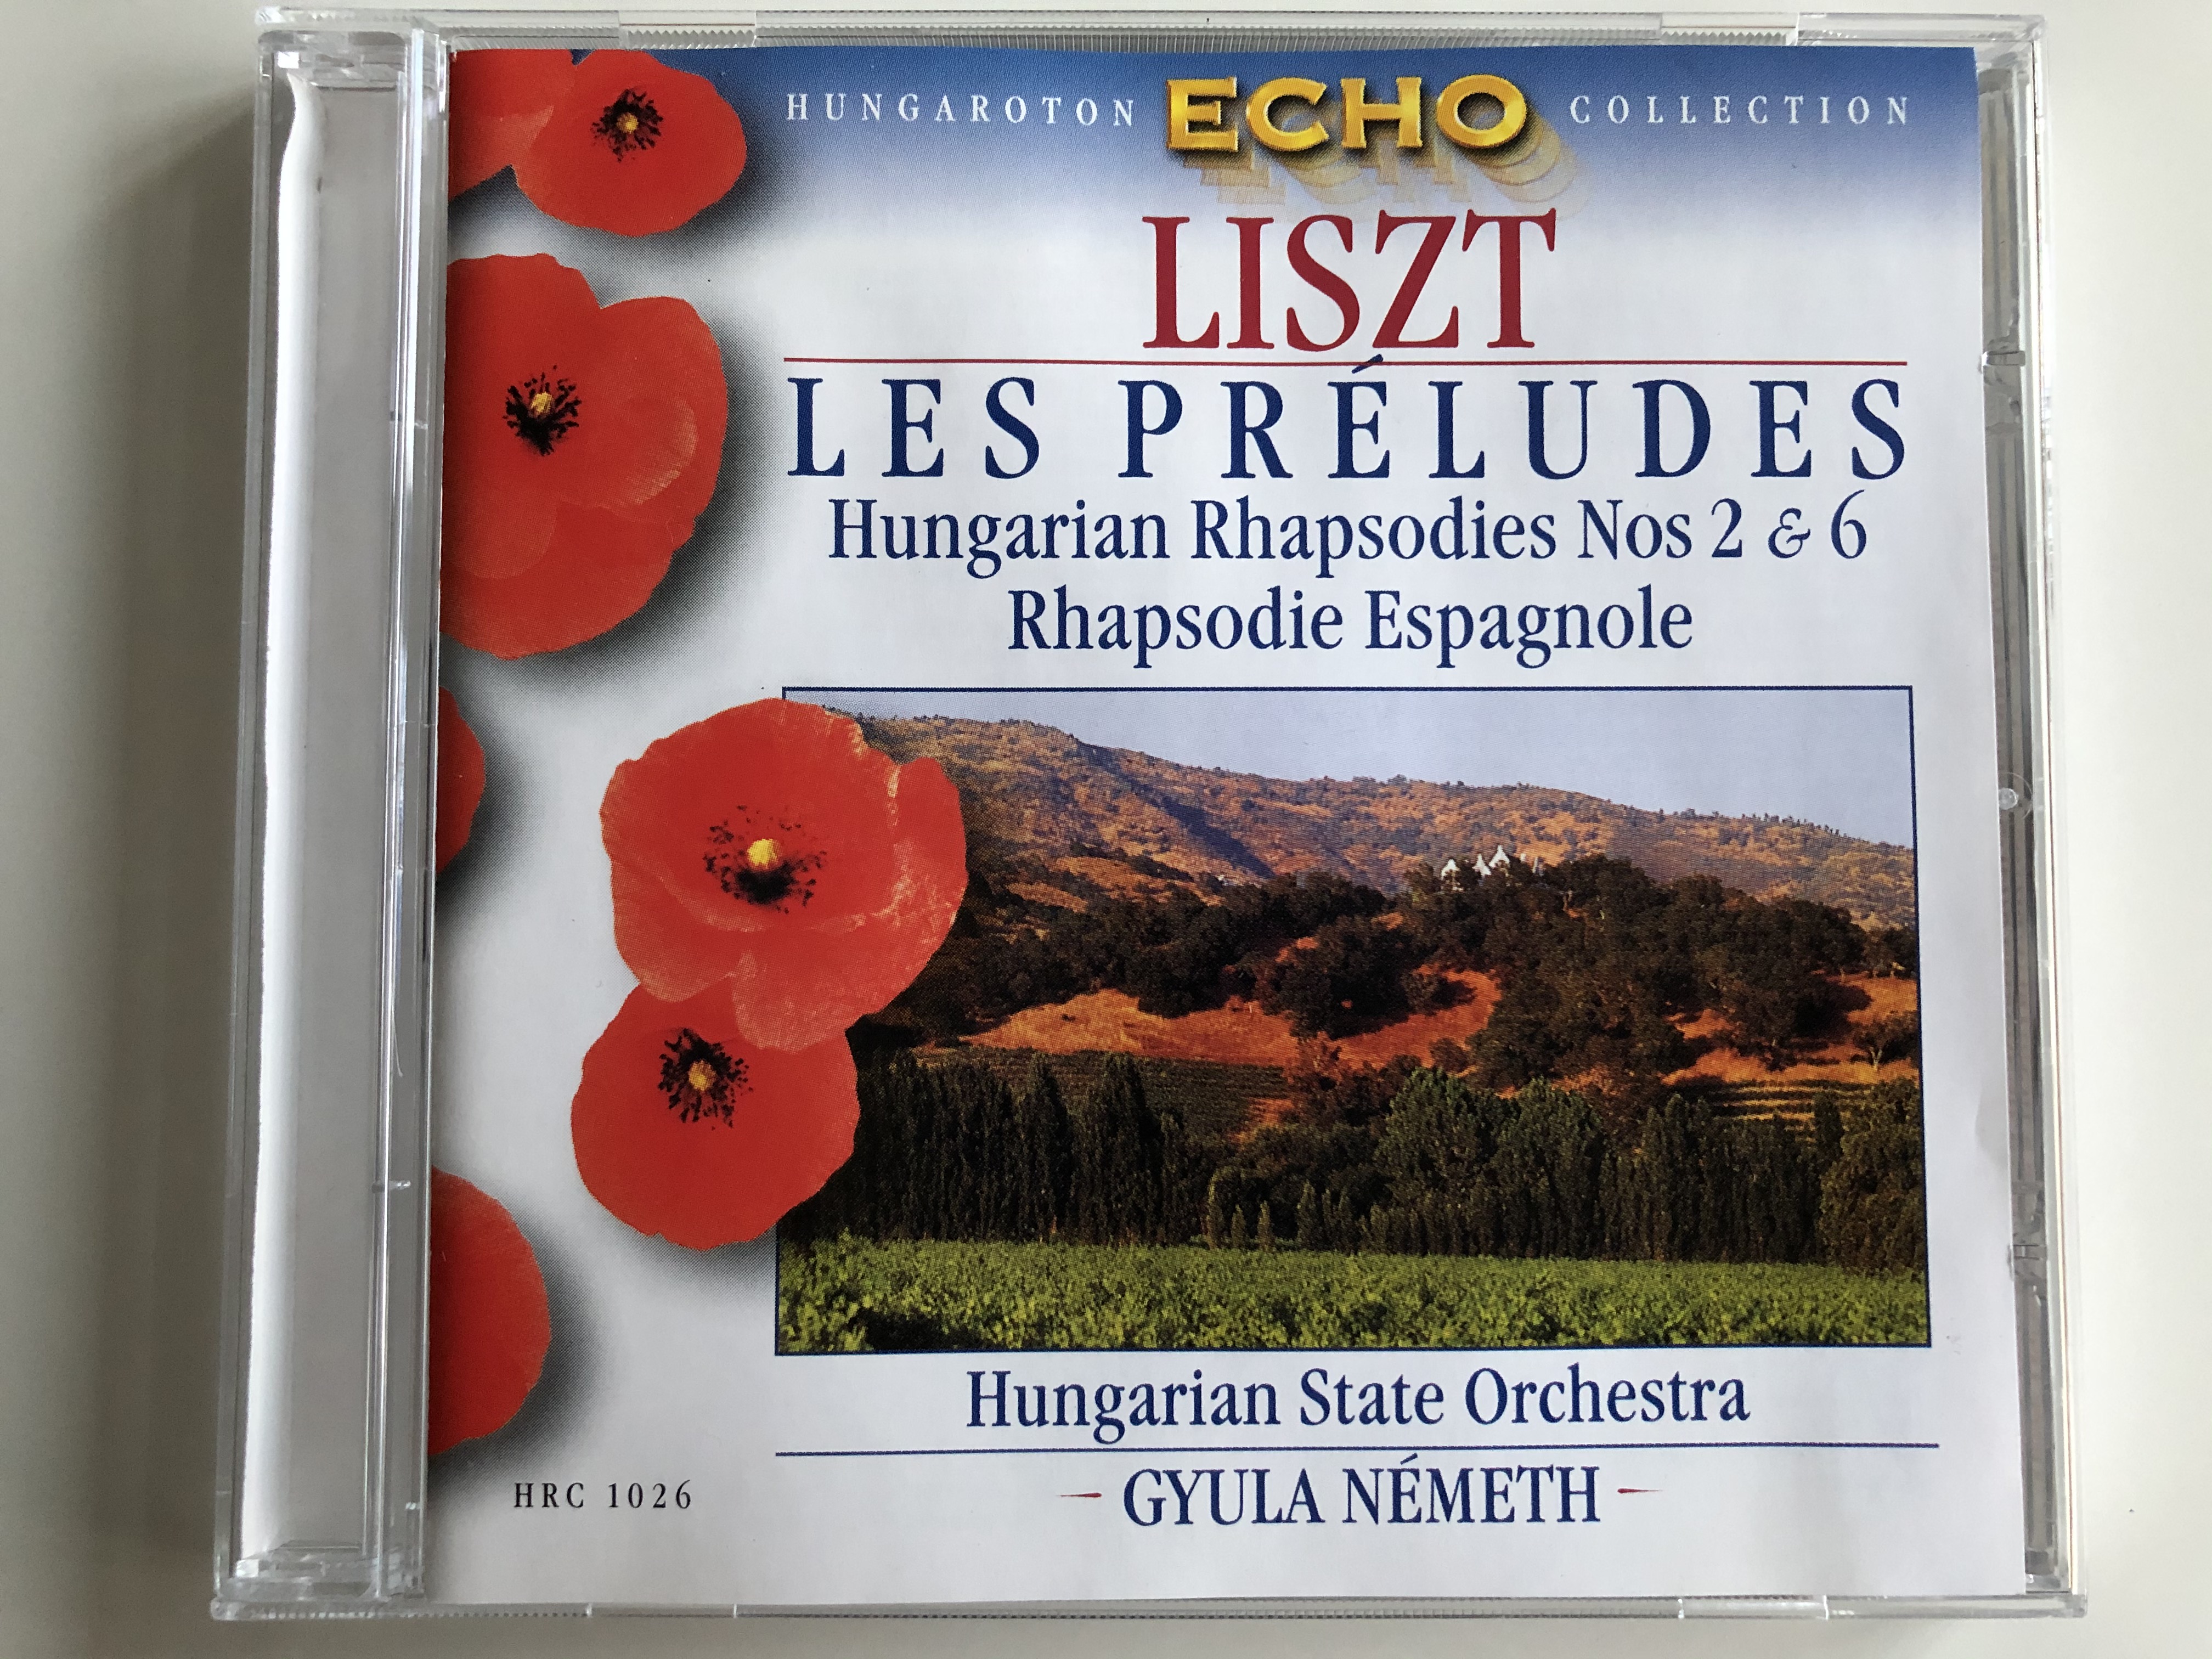 liszt-les-preludes-hungarian-rhapsodies-nos-2-6-rhapsodie-espagnole-hungarian-state-orchestra-gyula-nemeth-hungaroton-classic-audio-cd-1967-stereo-hrc-1026-1-.jpg